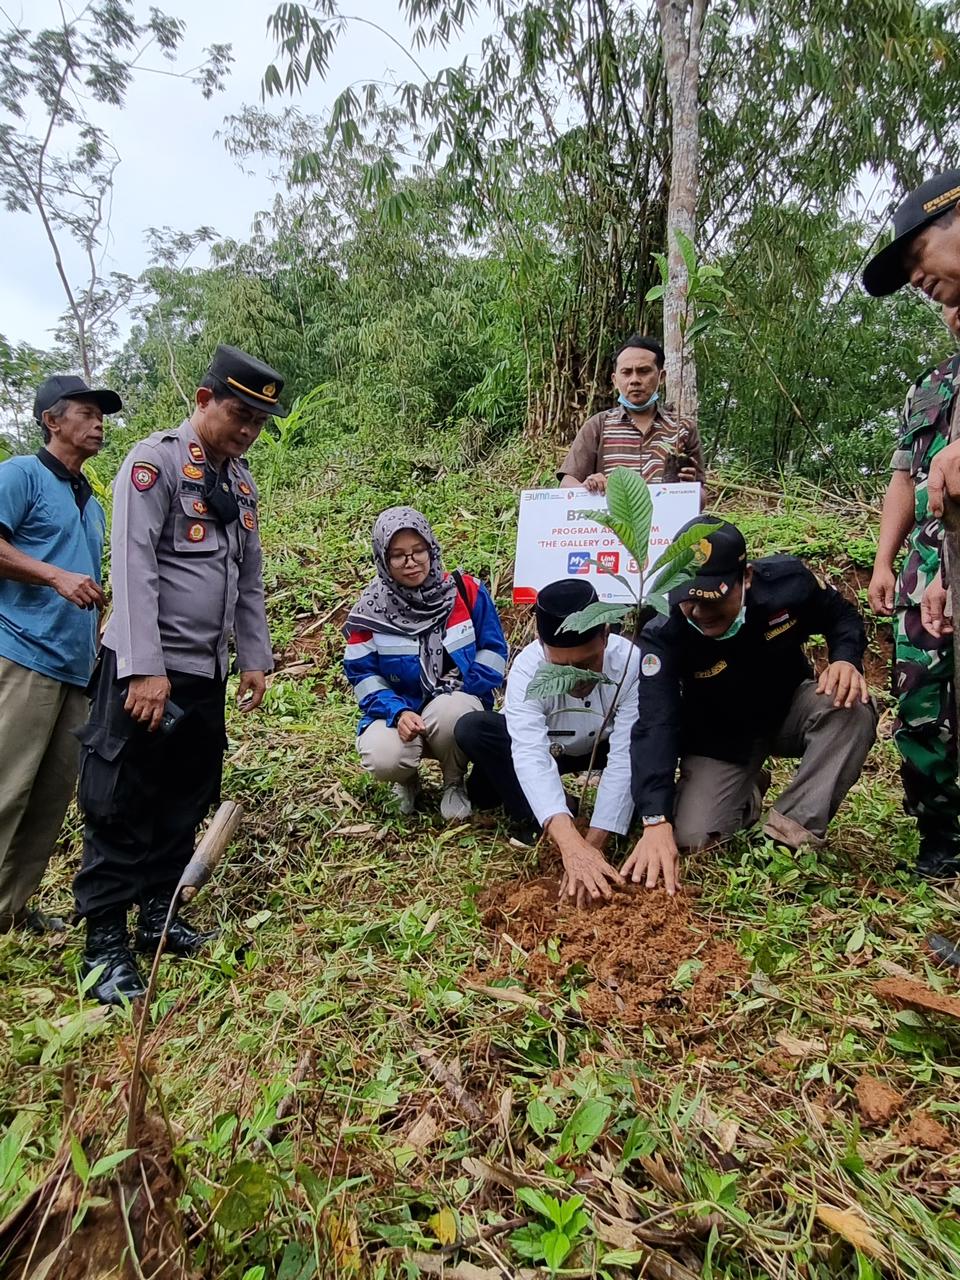 Pertamina Patra Niaga Kolaborasi Program ARBORETUM The Gallery of Sukapura di Tasikmalaya